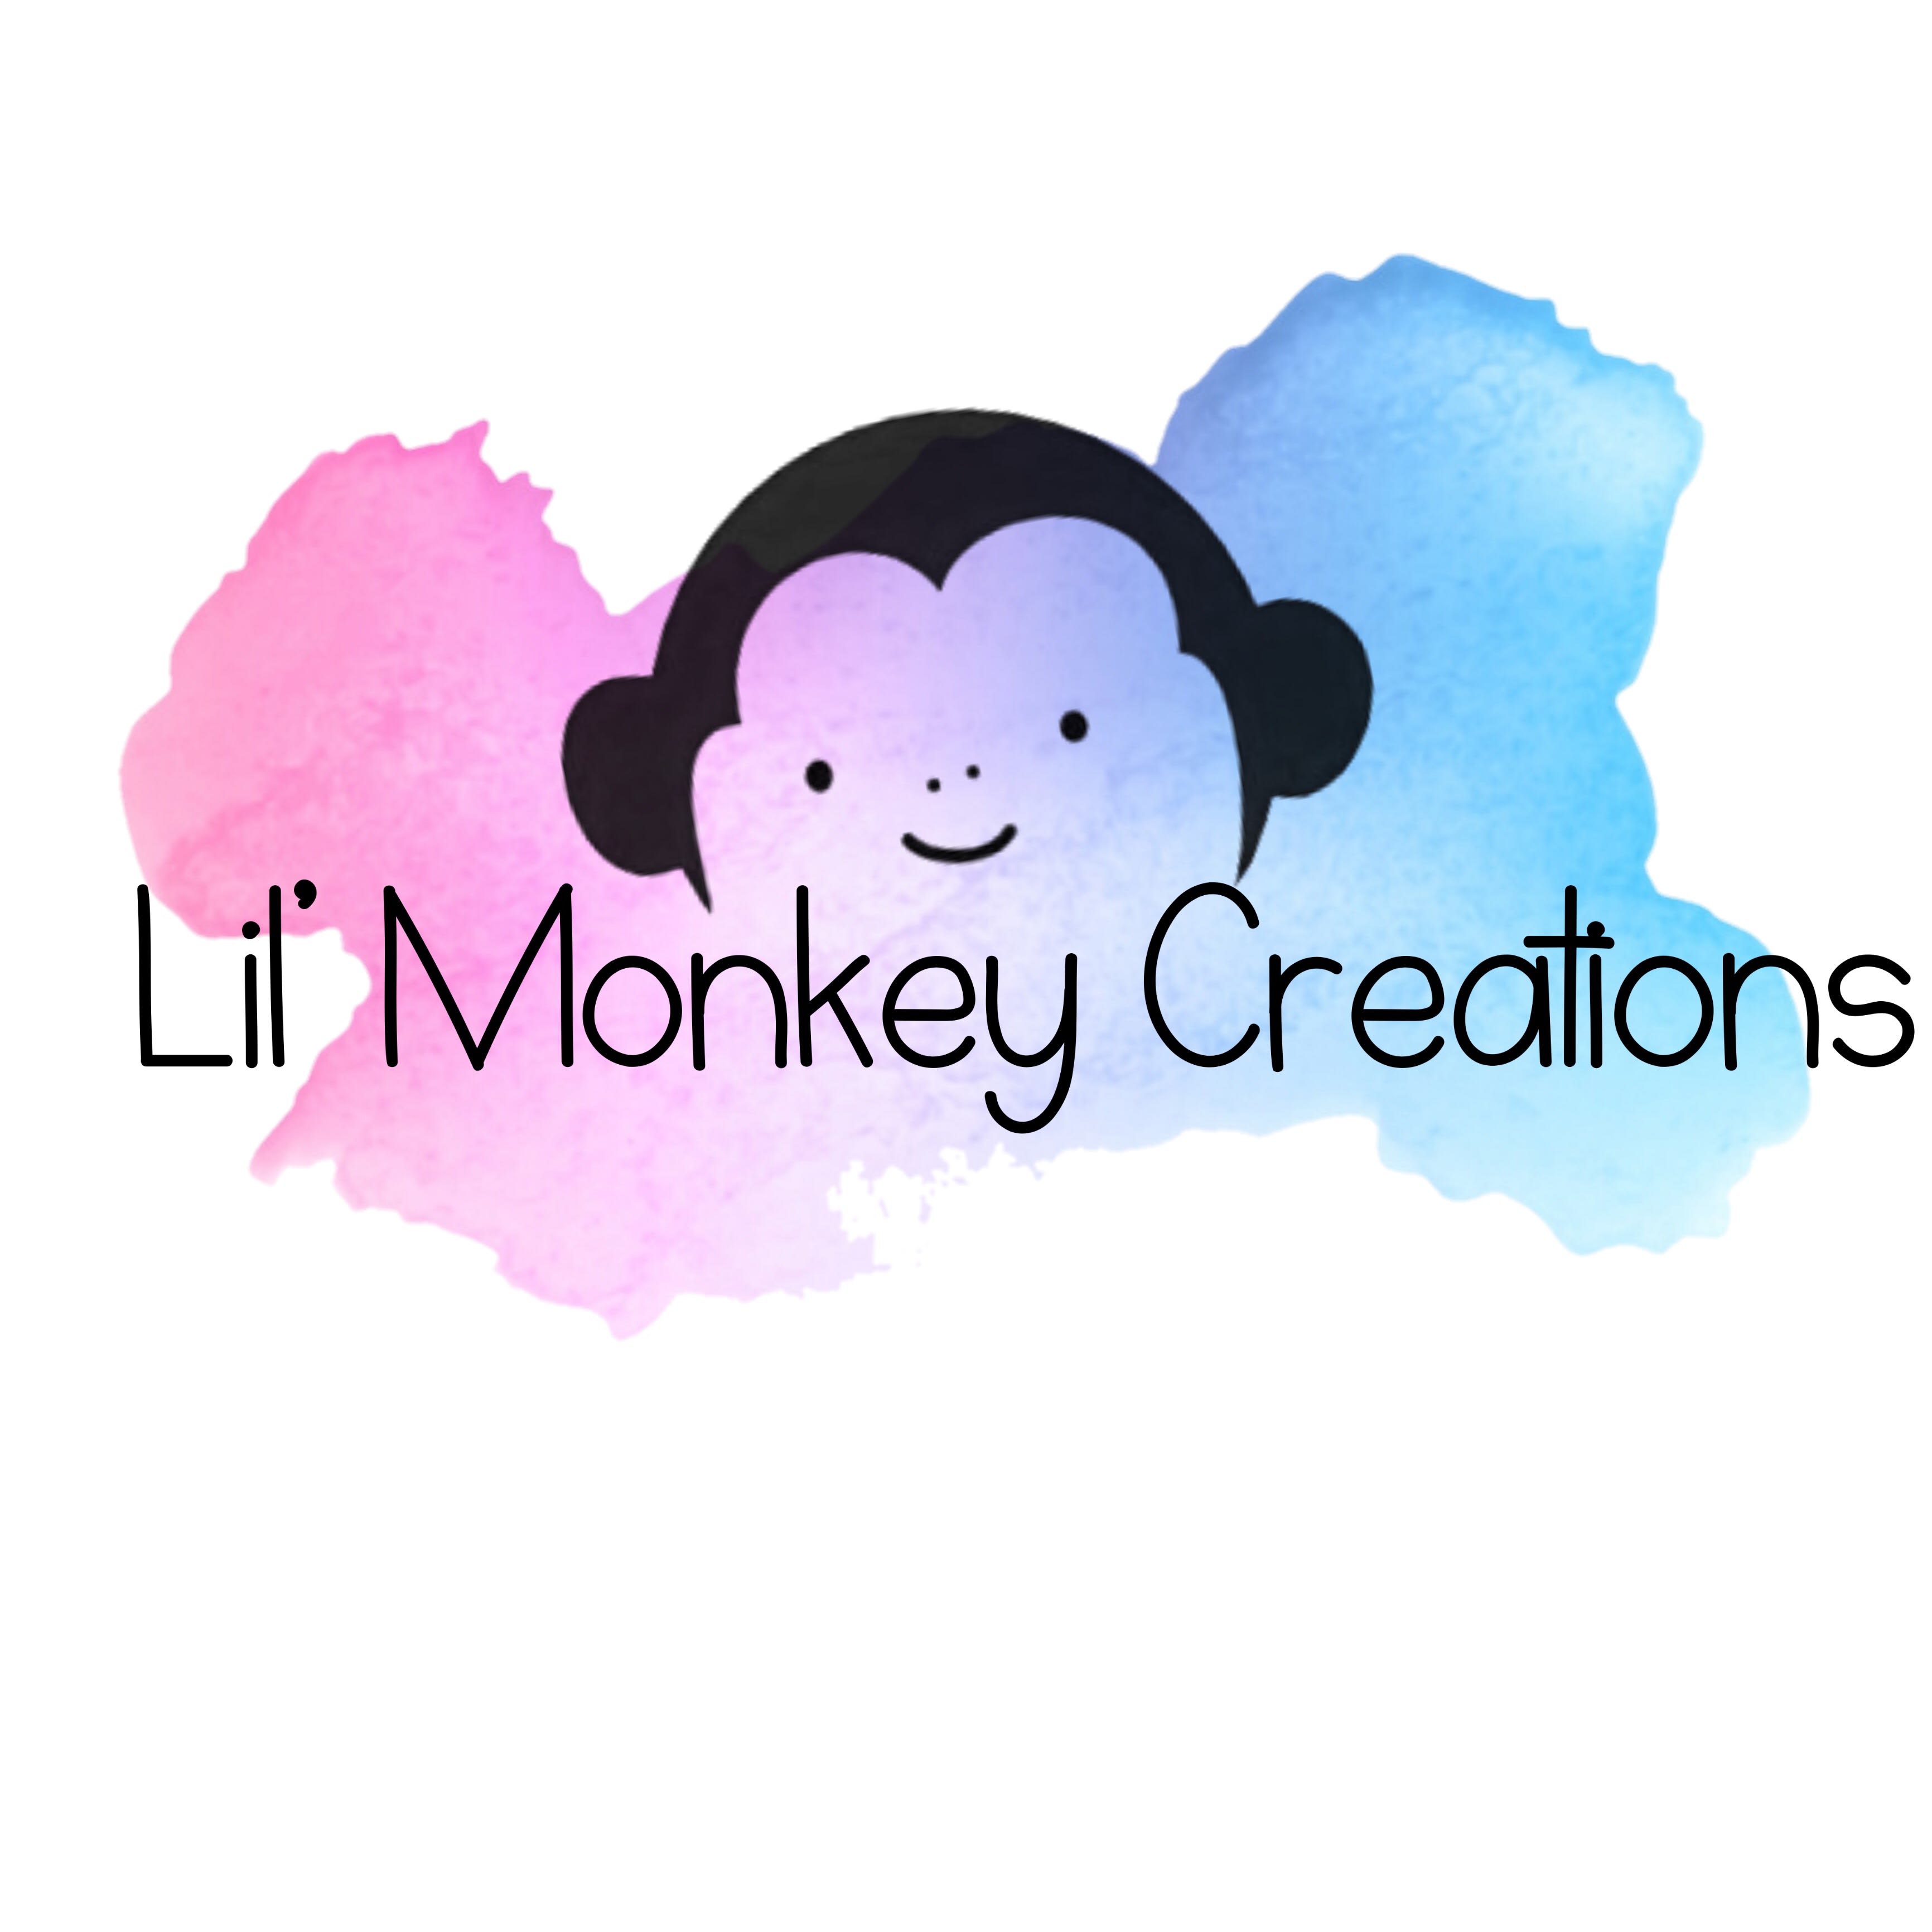 Lil Monkey Creations